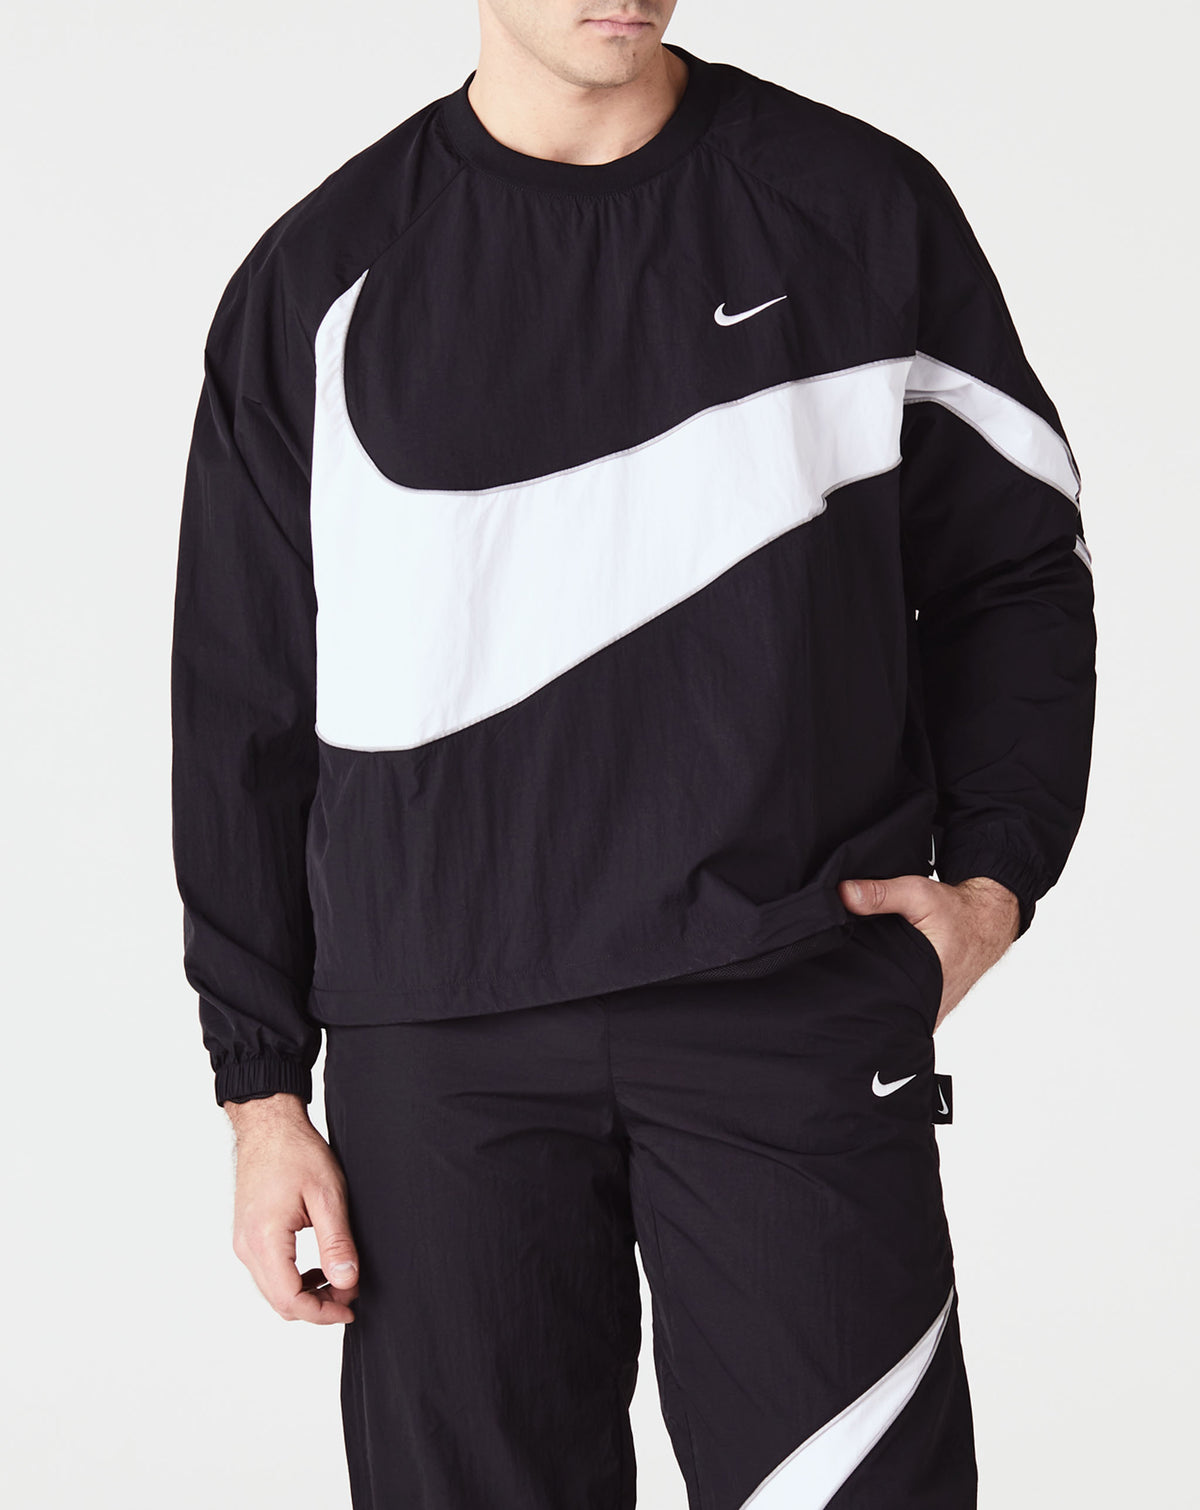 Nike Swoosh Woven Jacket - Rule of Next Apparel